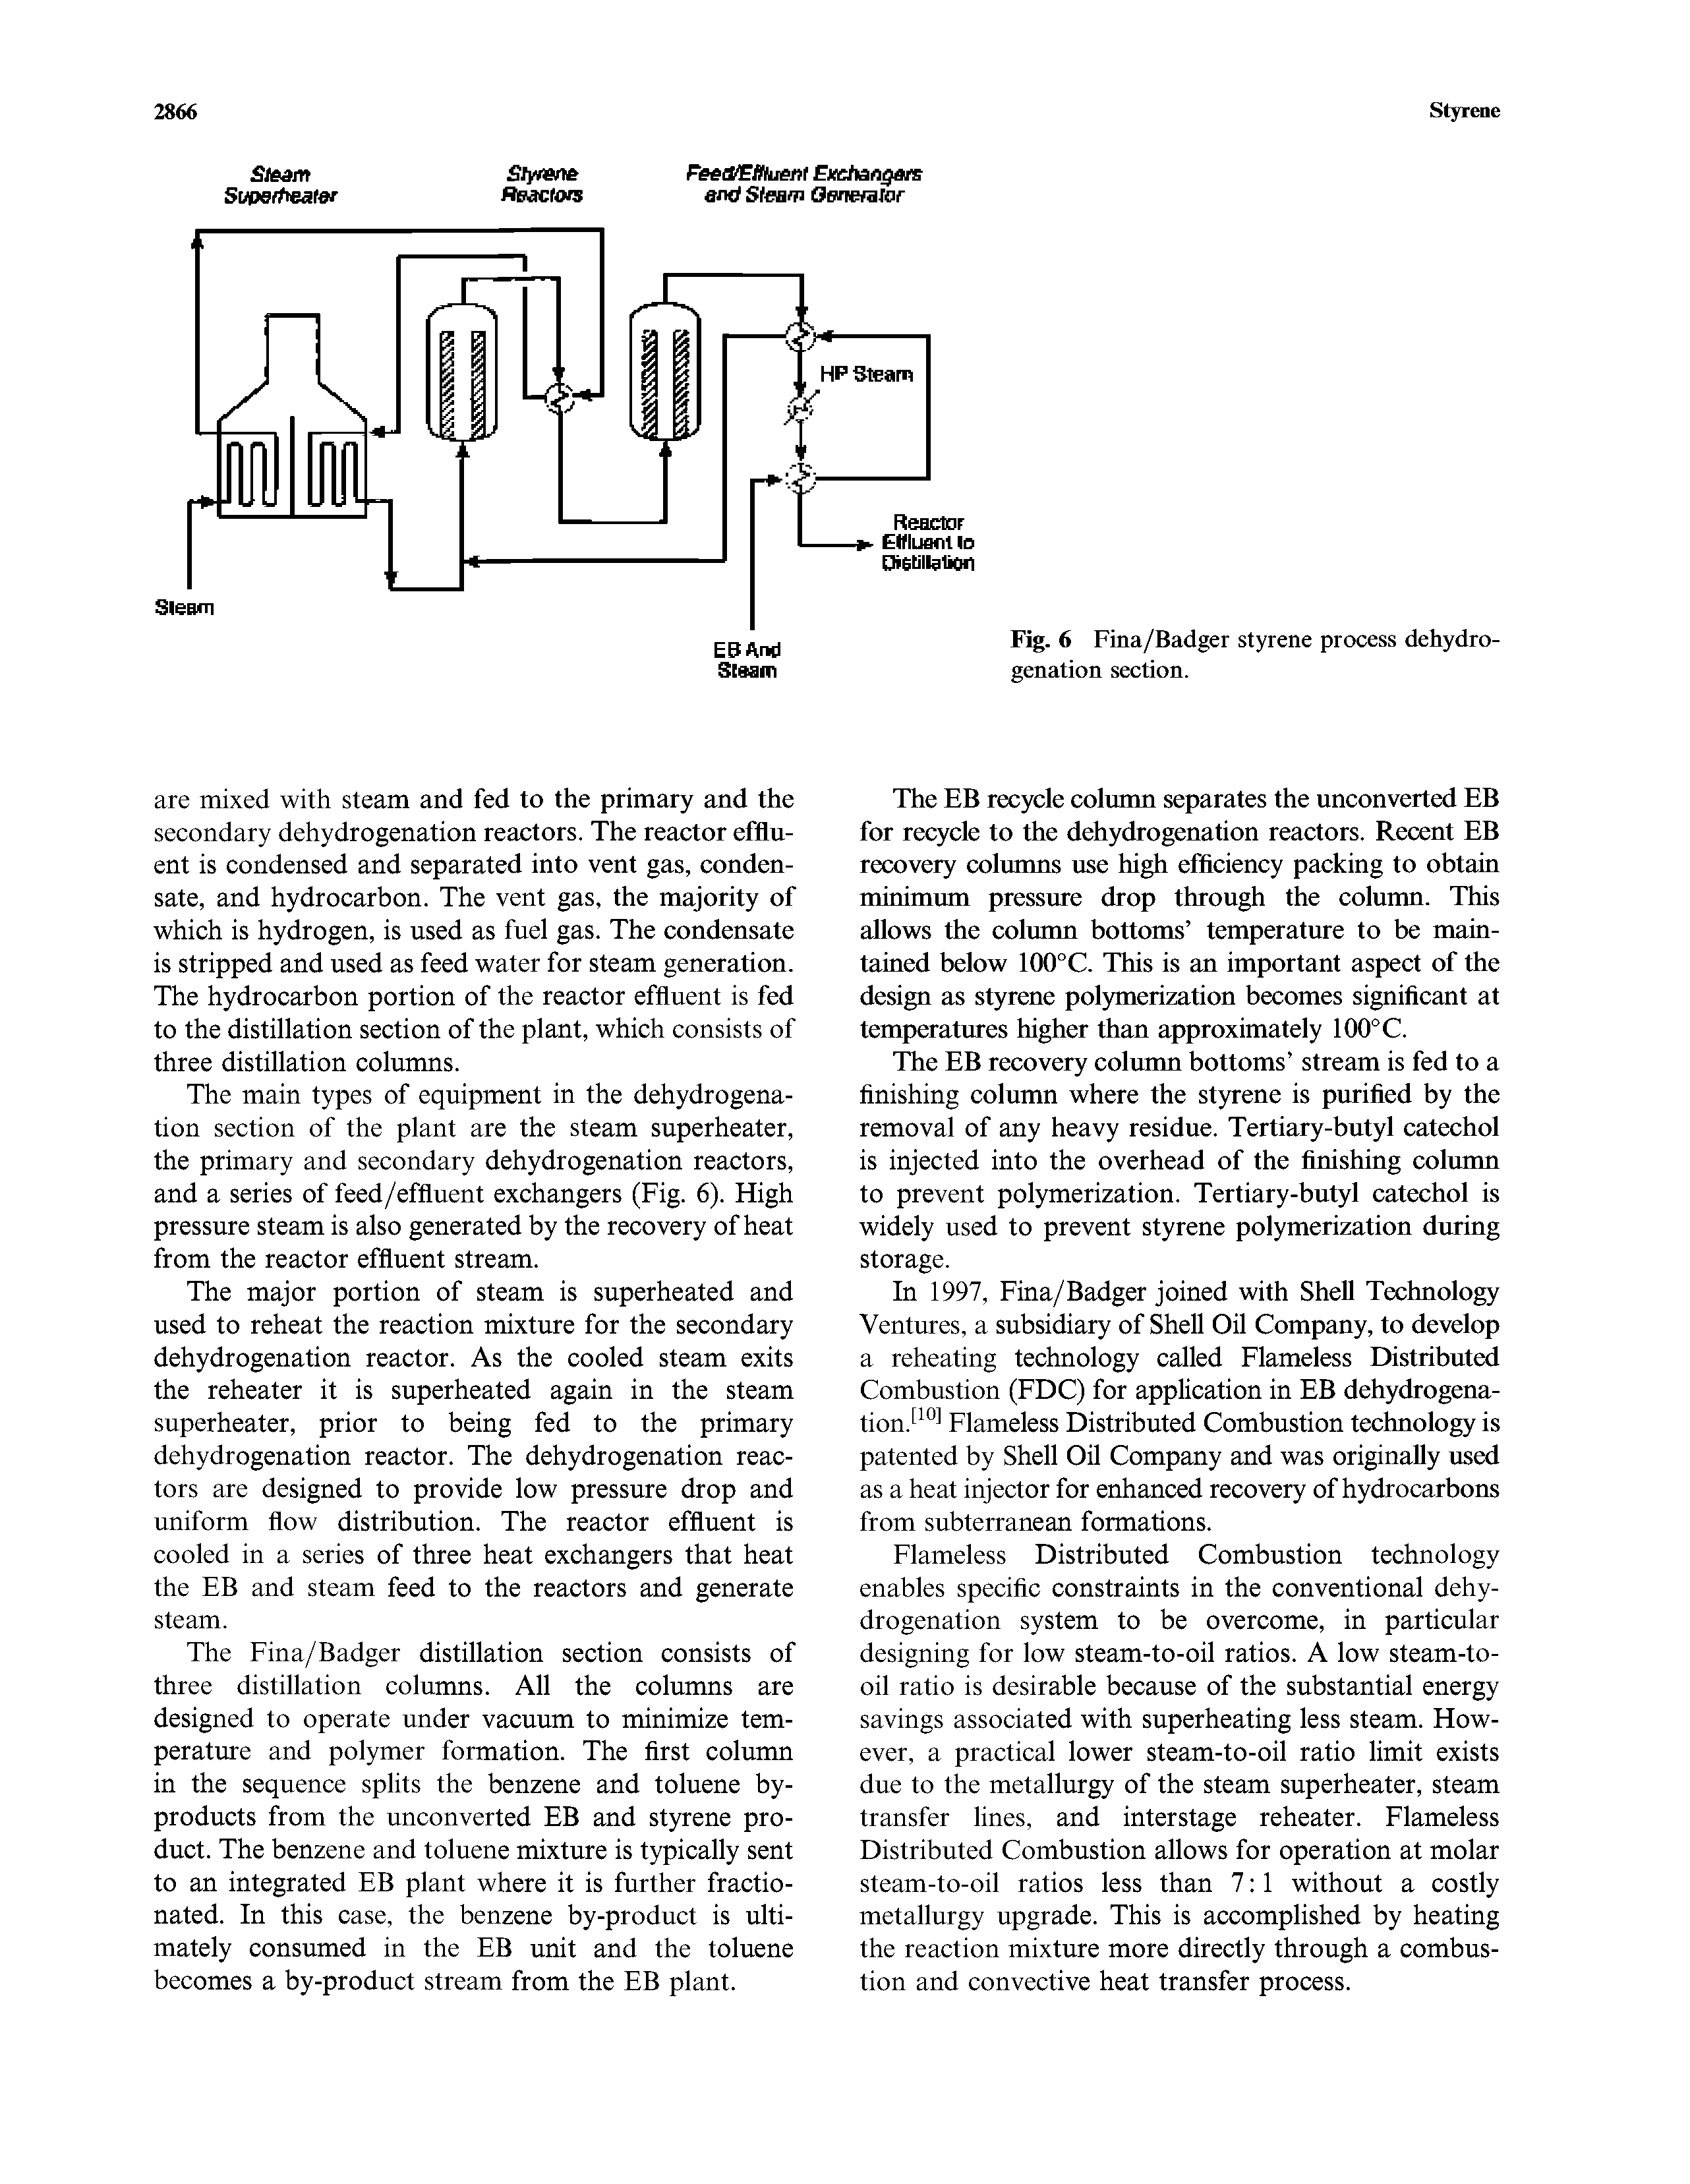 Fig. 6 Fina/Badger styrene process dehydrogenation section.